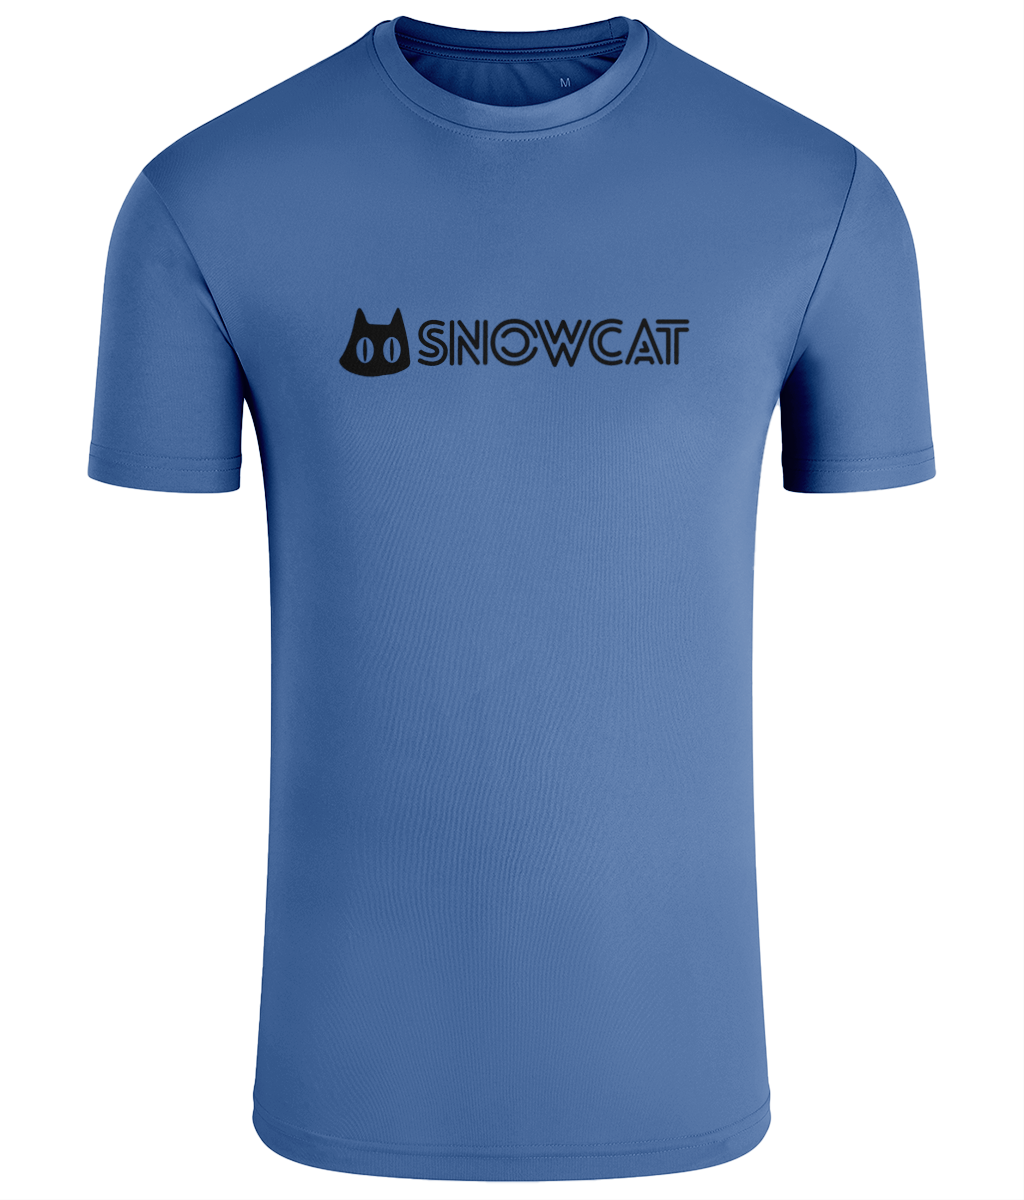 Snowleader Fishing Bear Tee Blue T-shirts : Snowleader